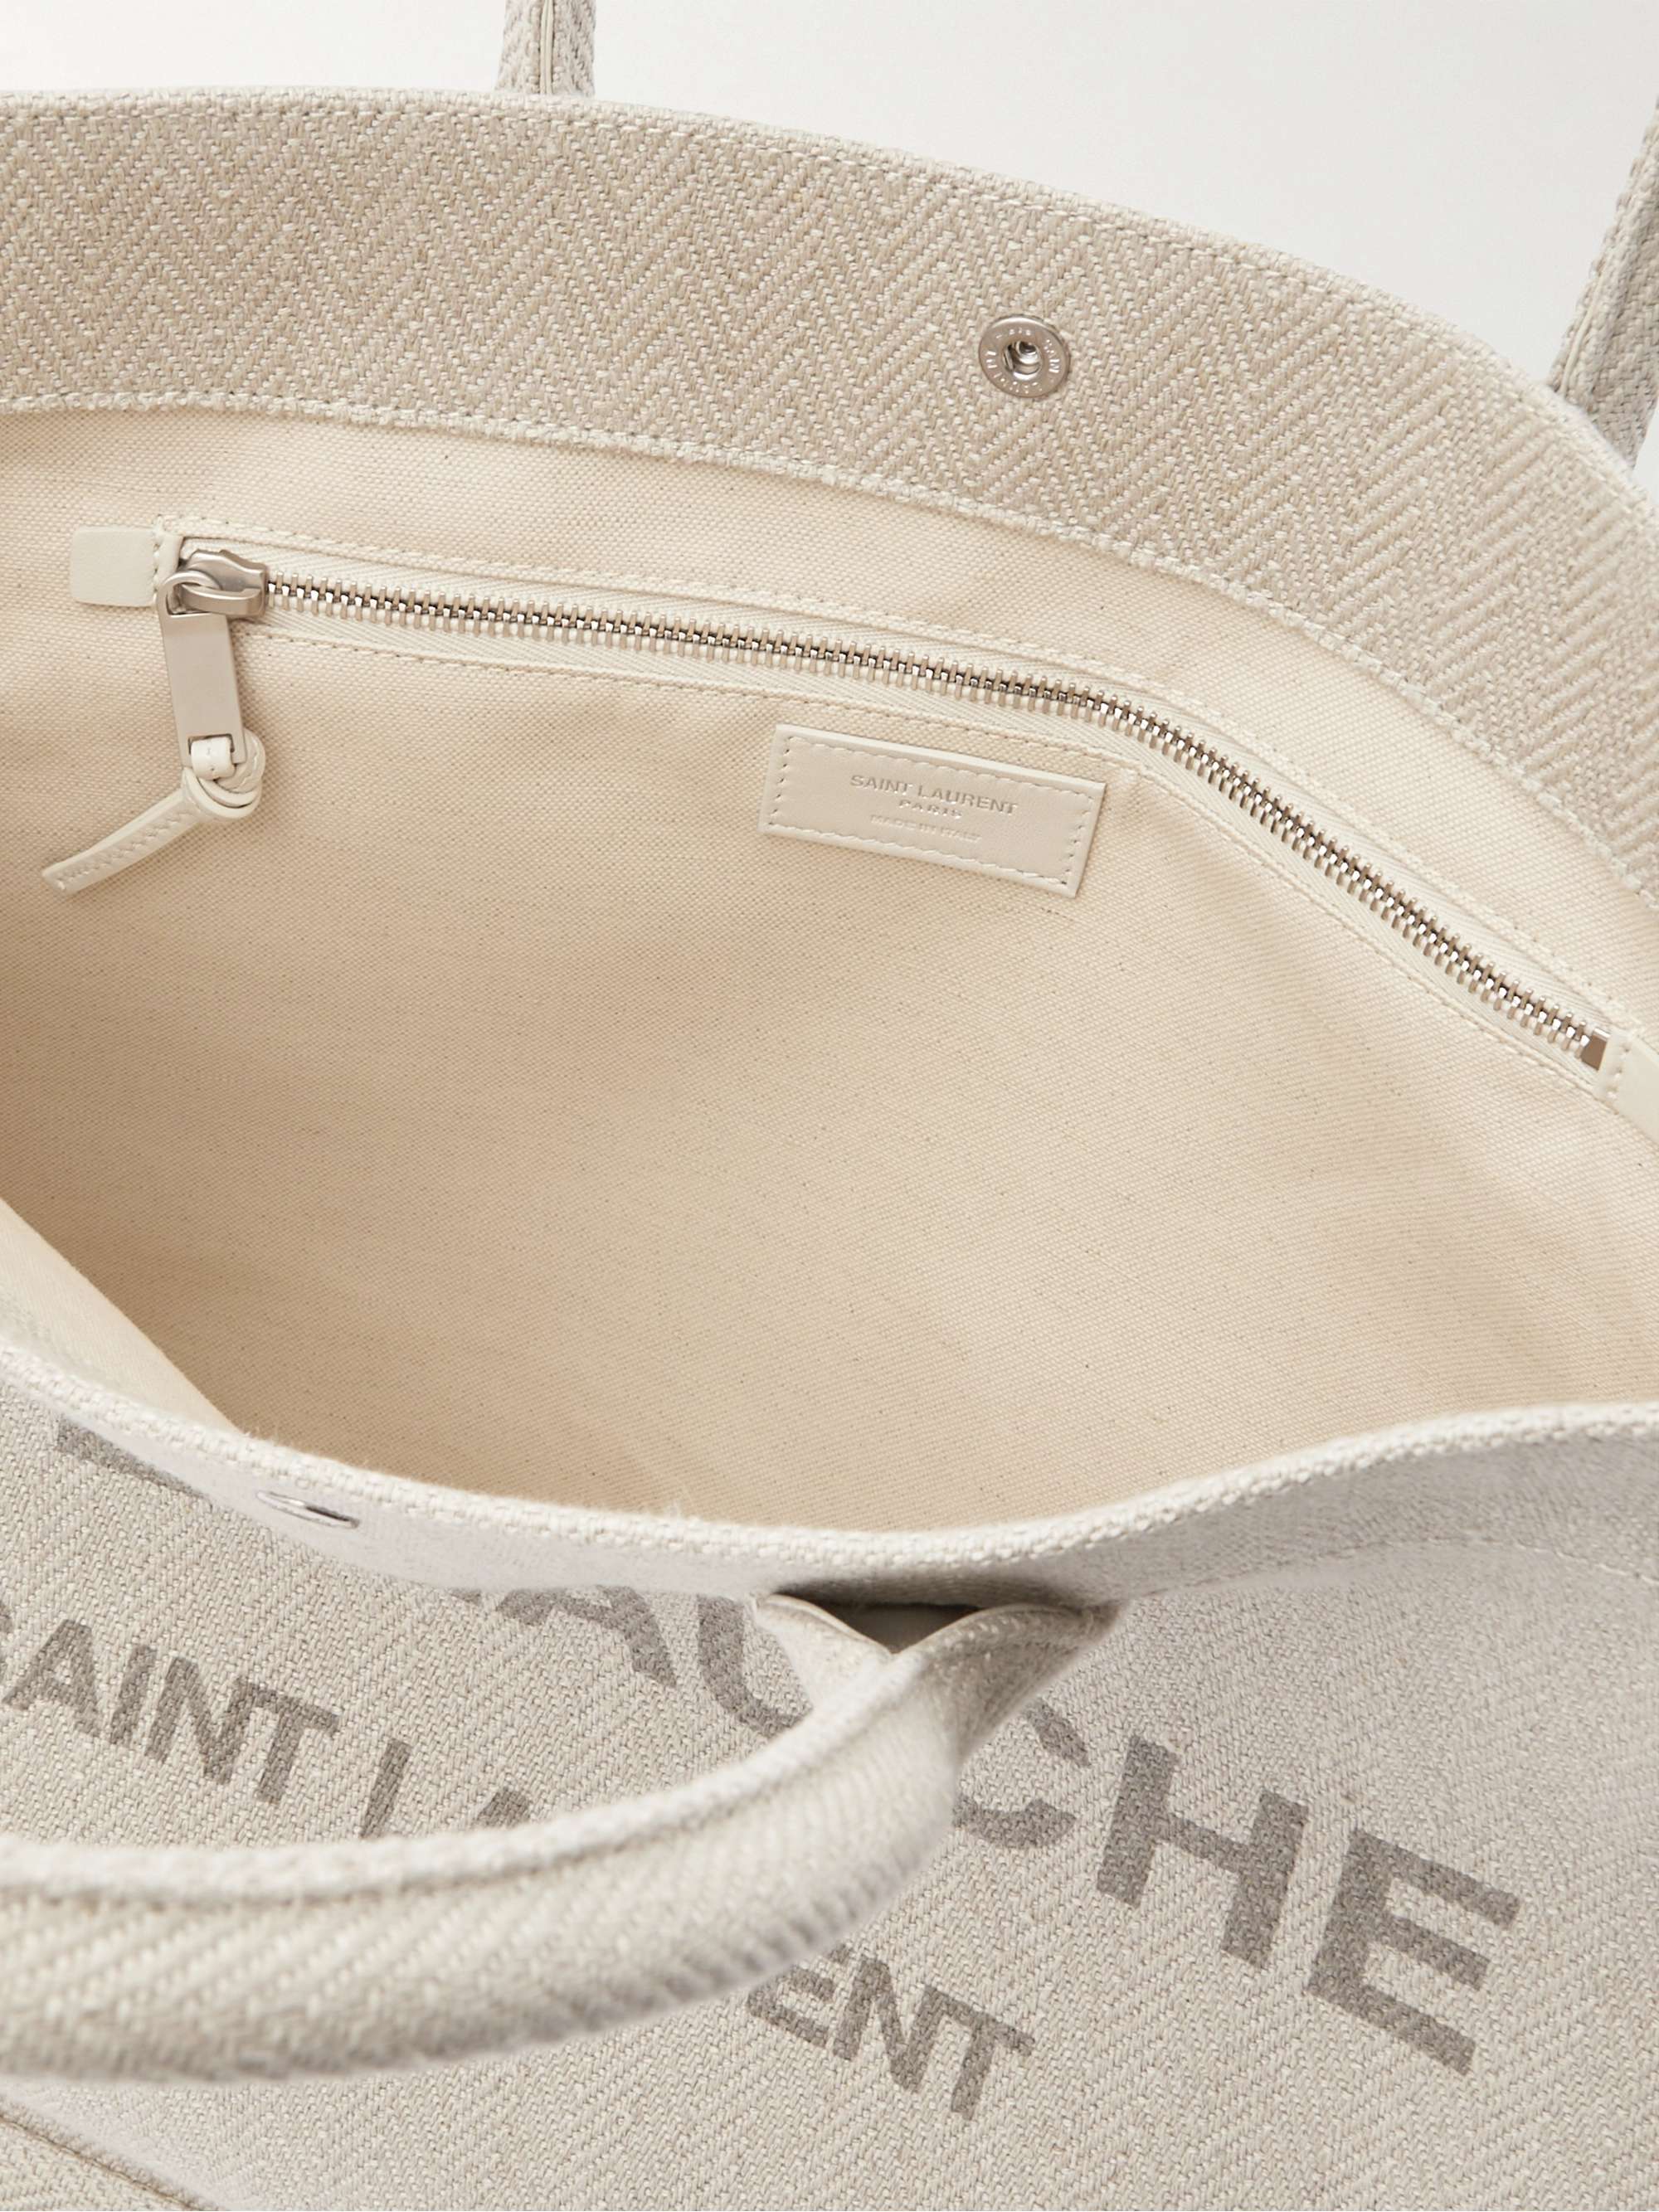 SAINT LAURENT Noe Leather-Trimmed Logo-Print Canvas Tote Bag